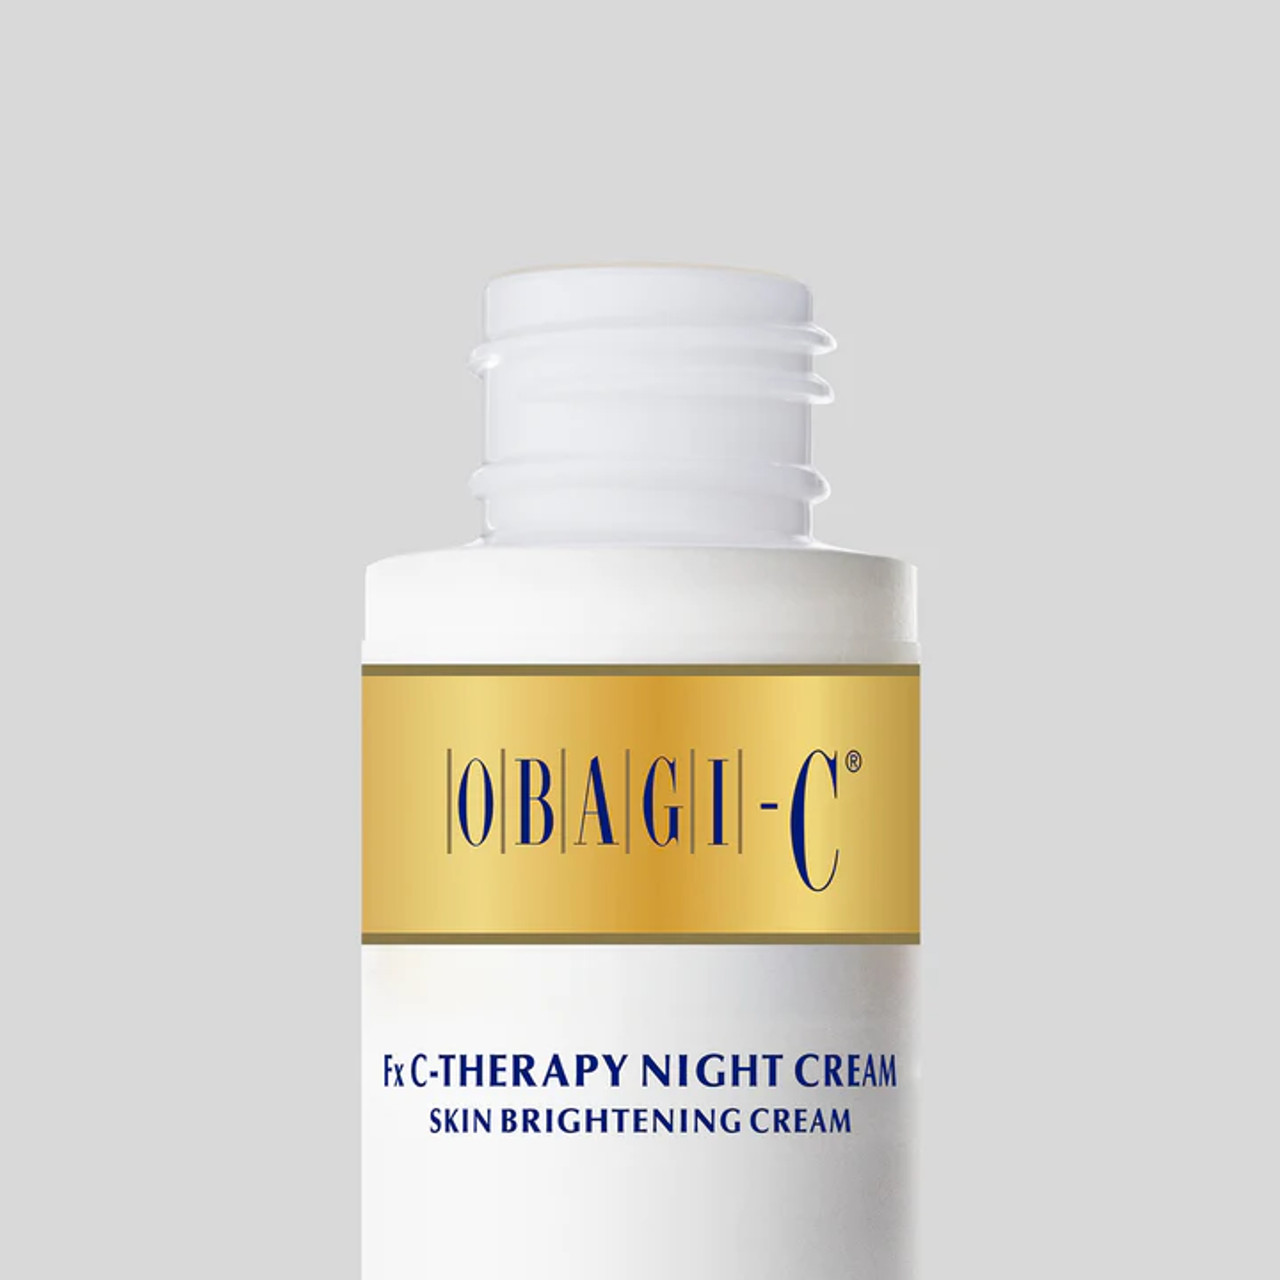 Obagi-C Fx System - Normal to Oily Skin